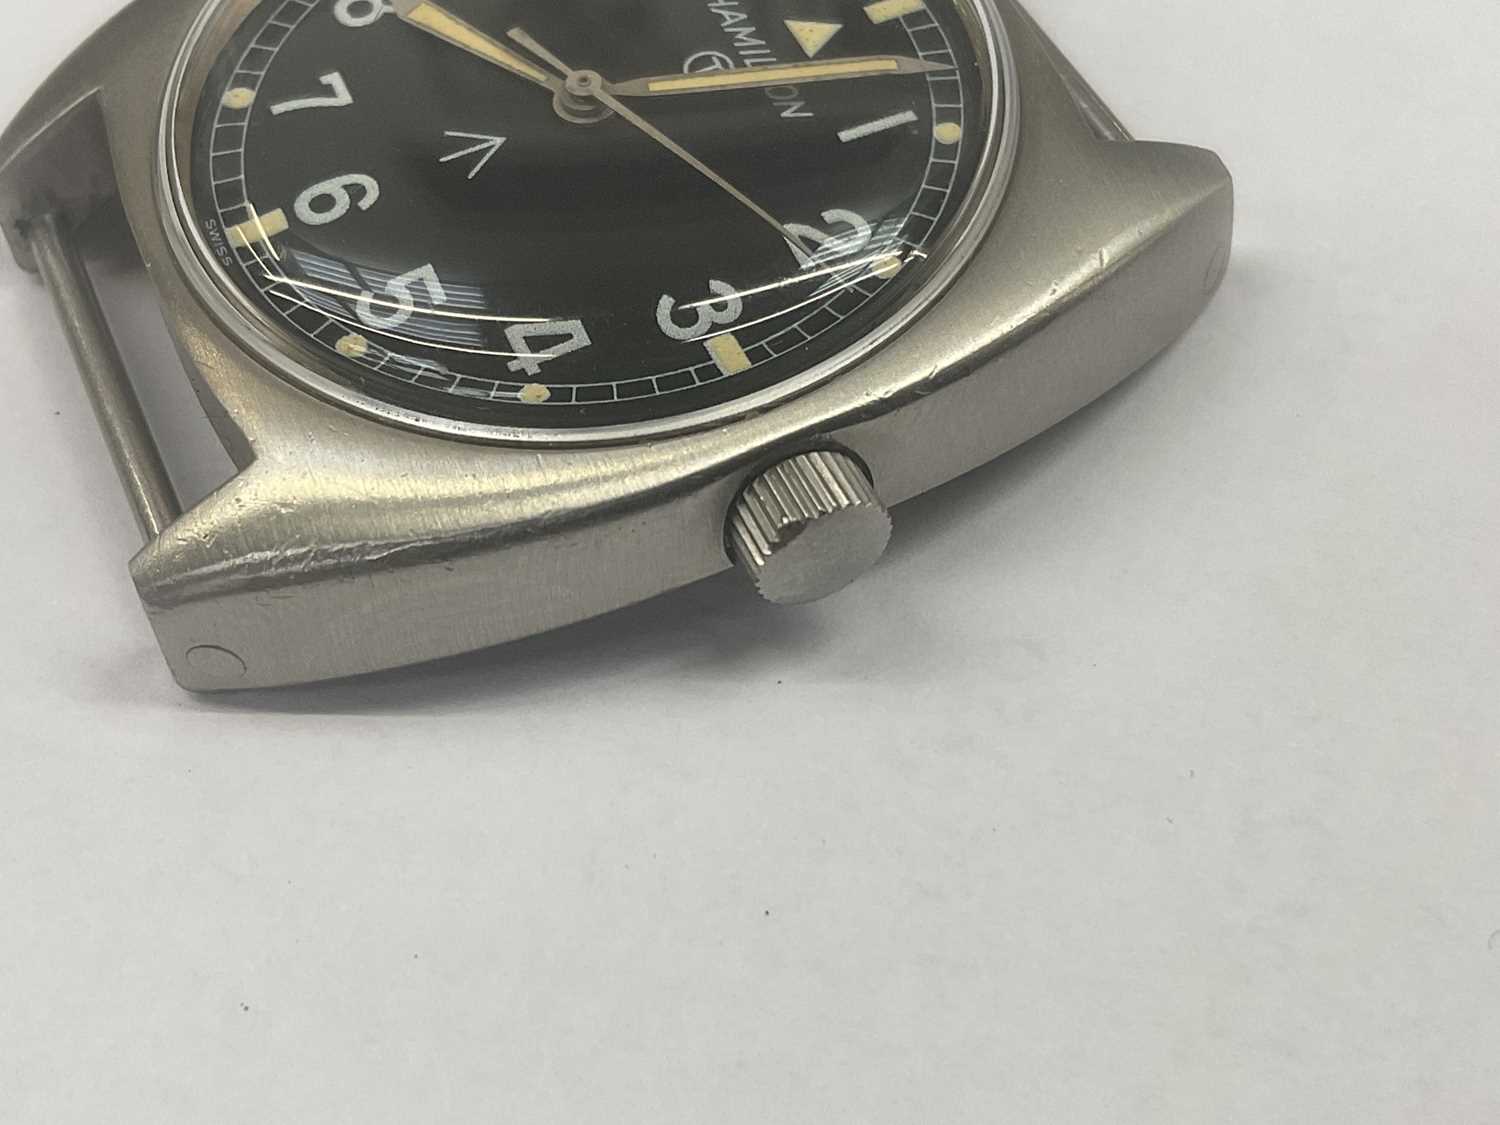 Hamilton military wristwatch - Image 4 of 5